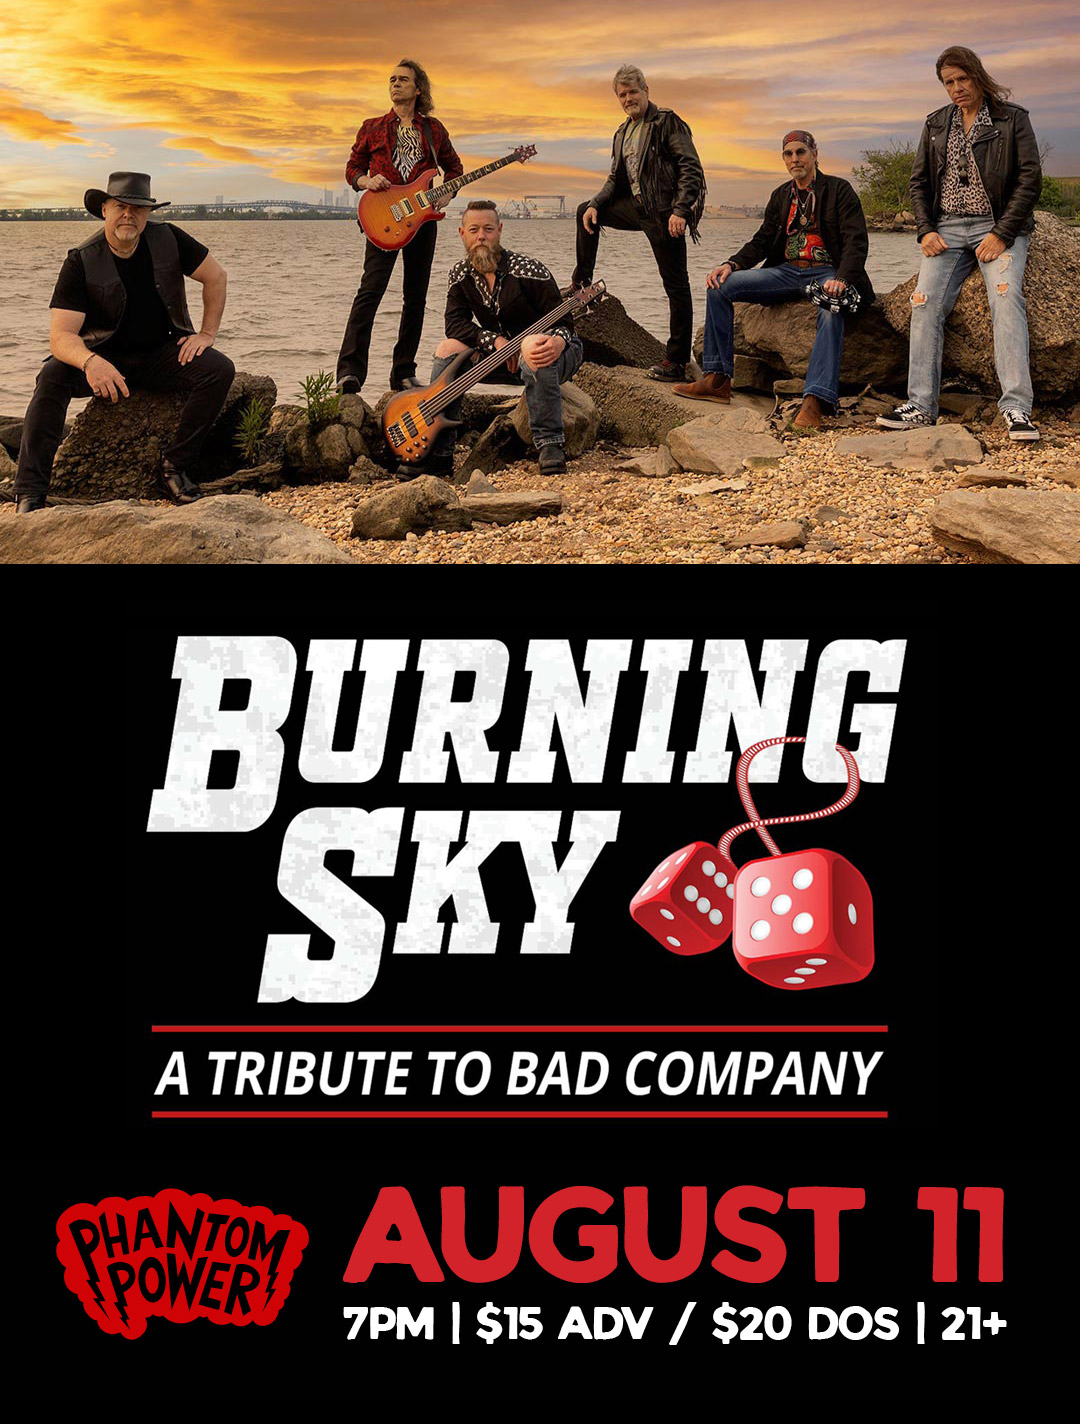 Burning Sky Band at Phantom Power Aug11